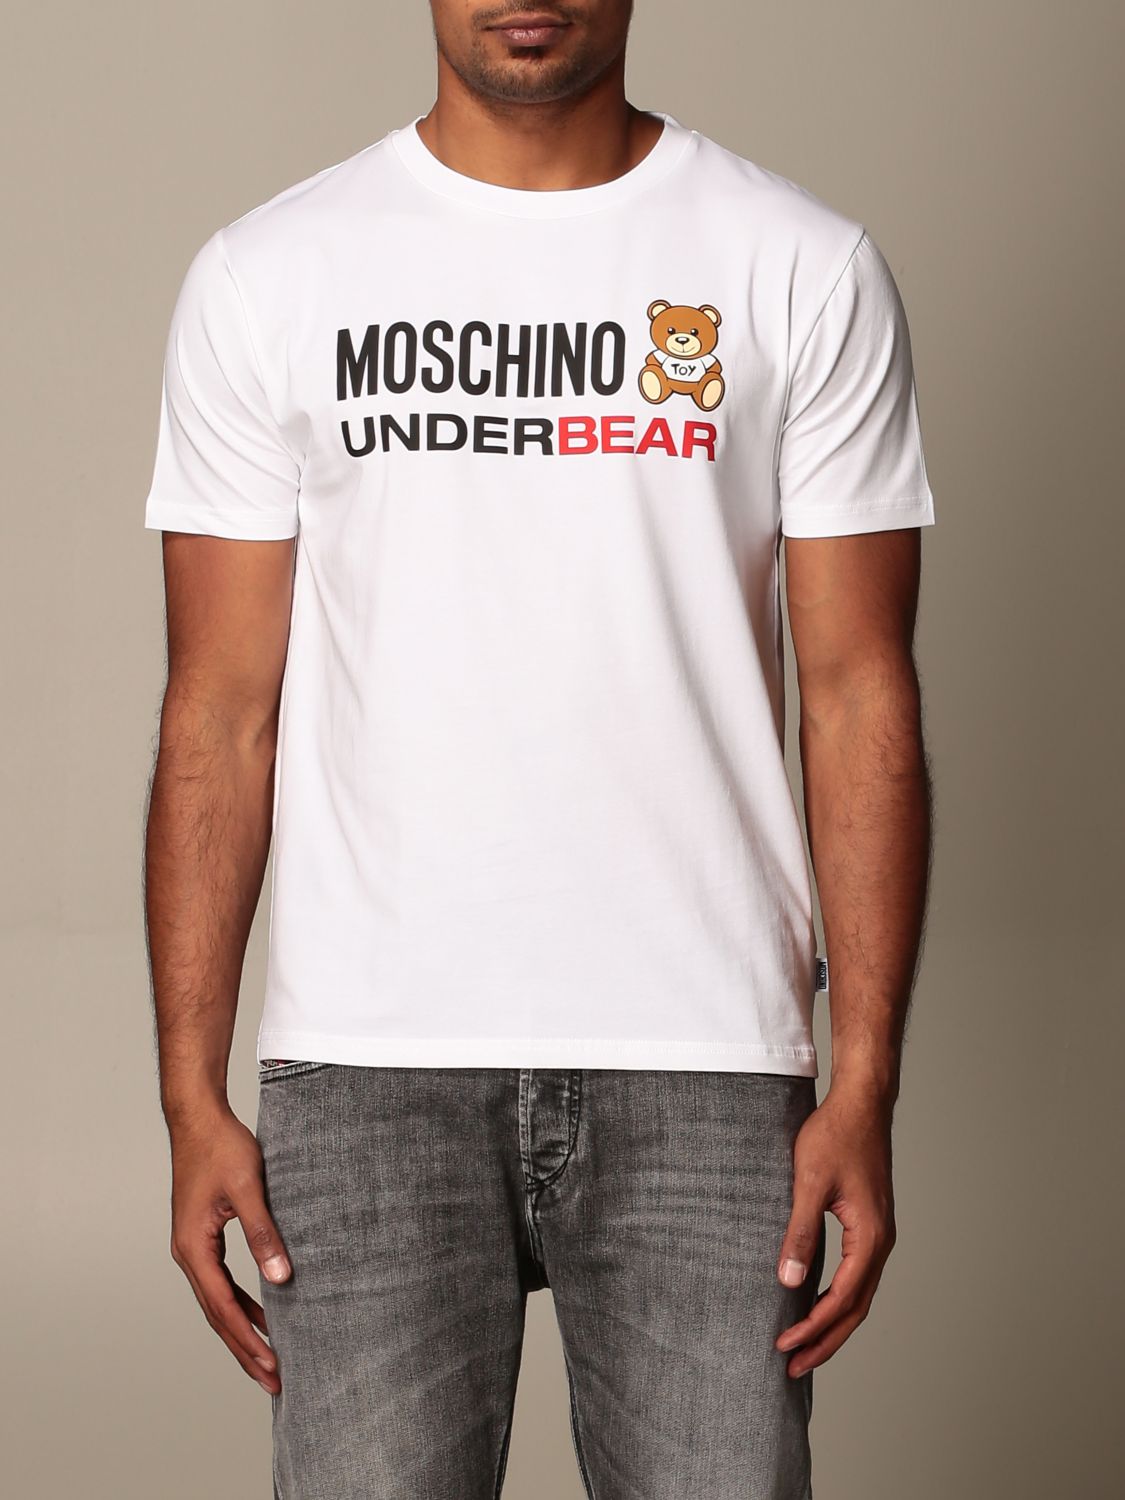 moschino underbear t shirt mens